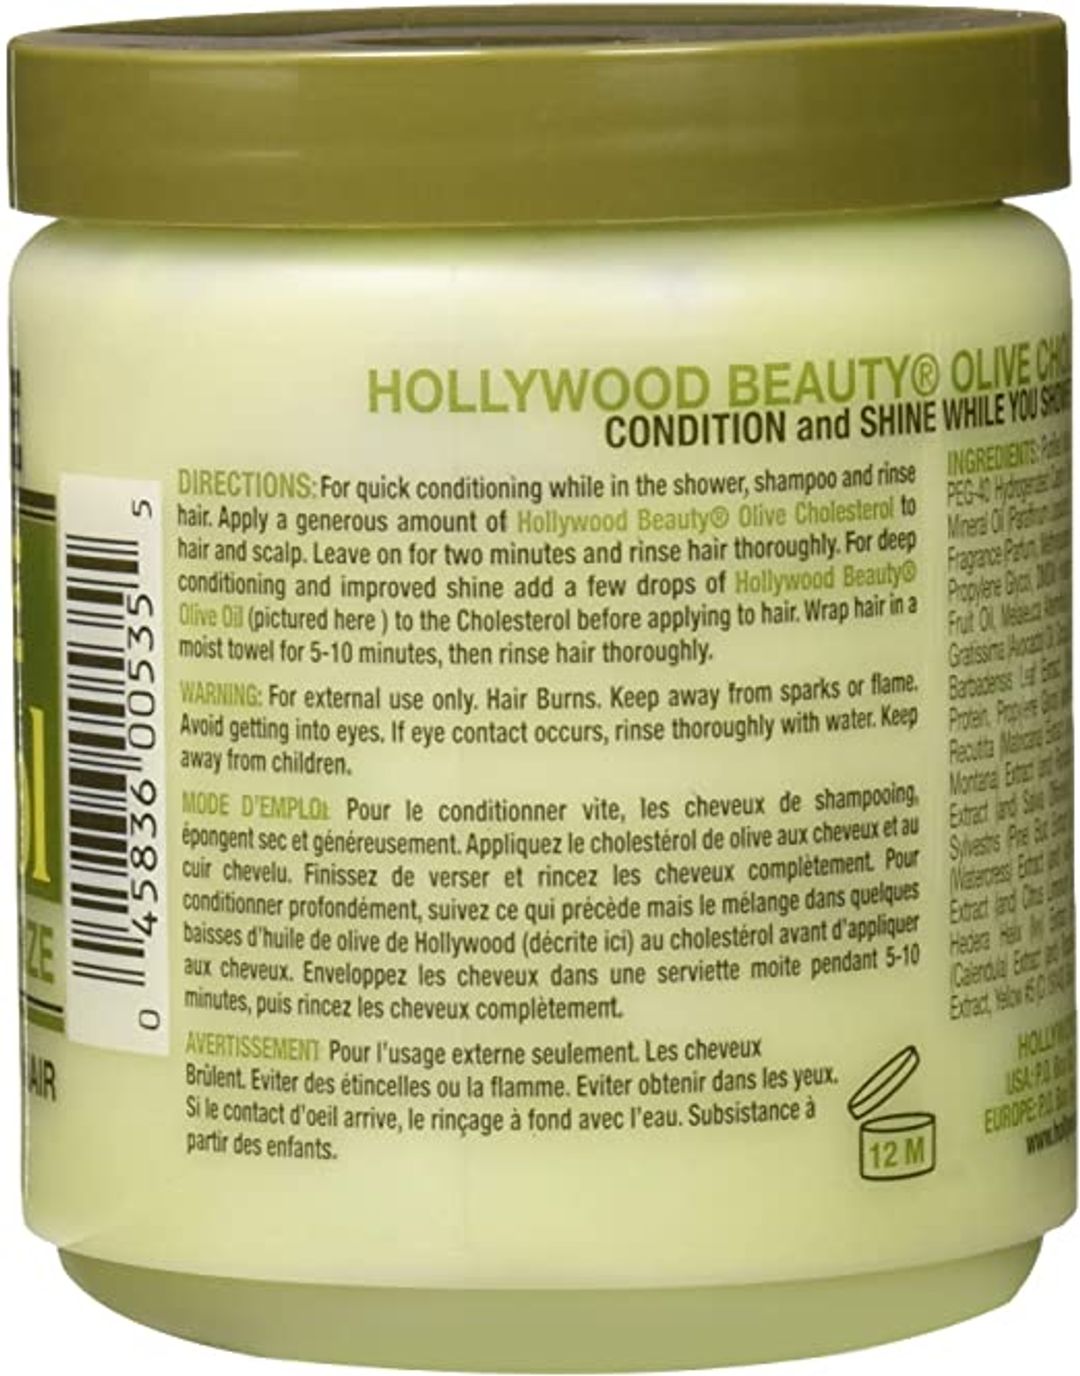 Hollywood Beauty Olive Cholesterol - 20oz